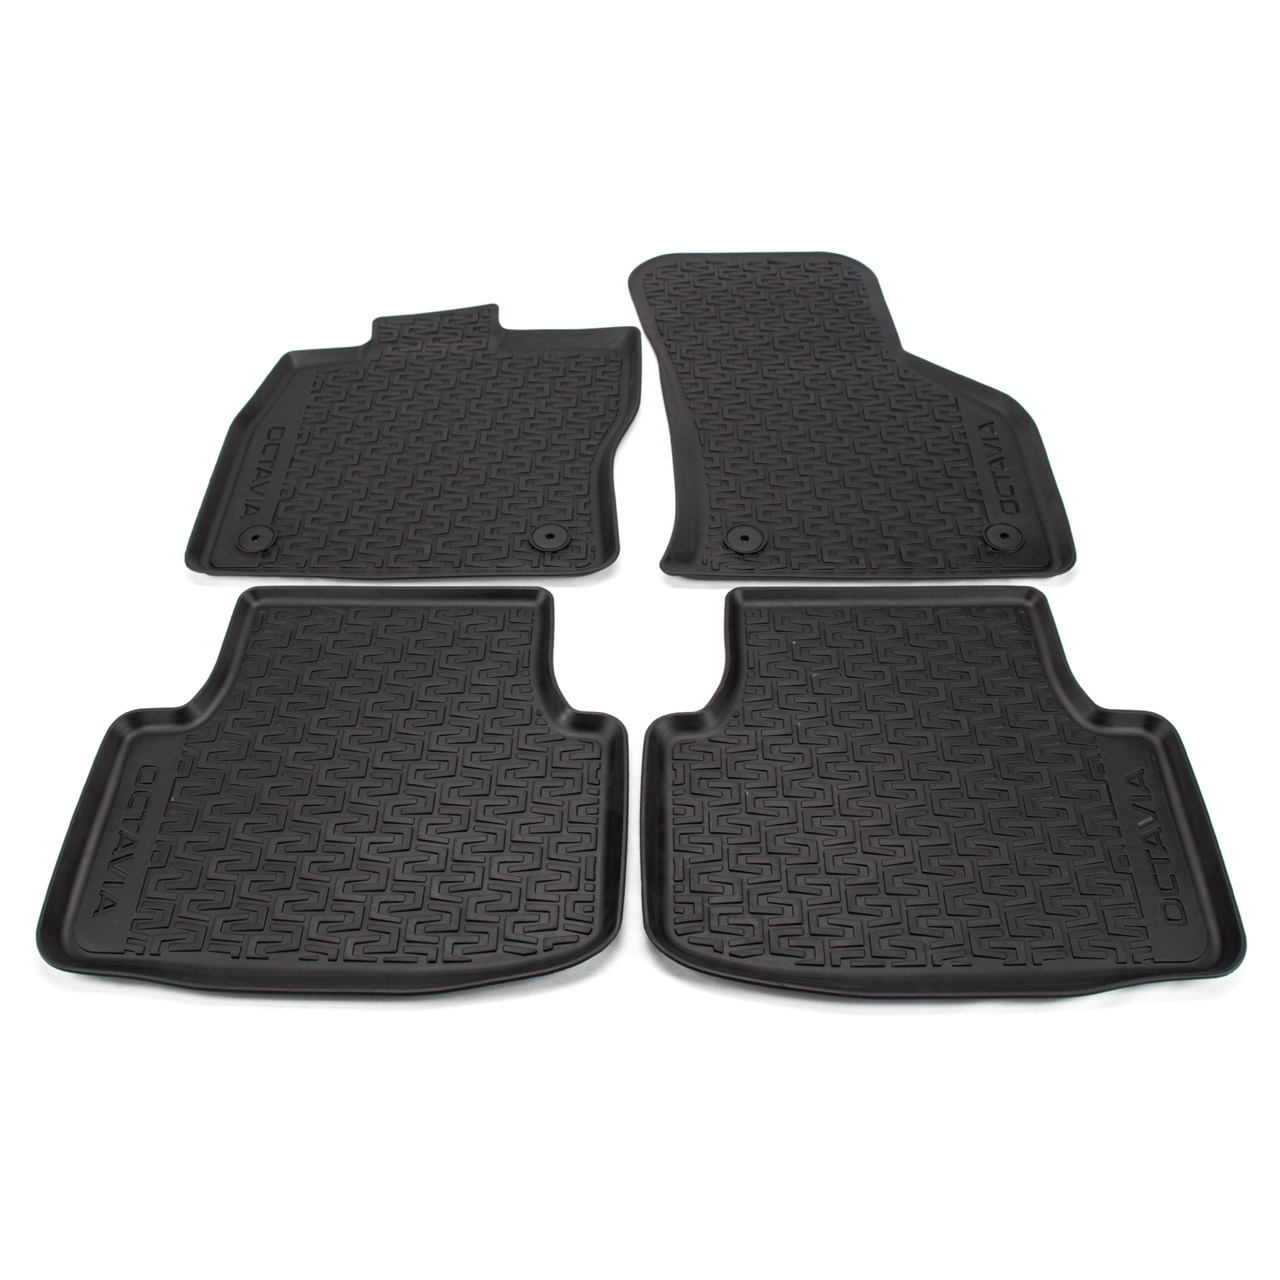 Original rubber mats / rubber floor mats for your vehicle